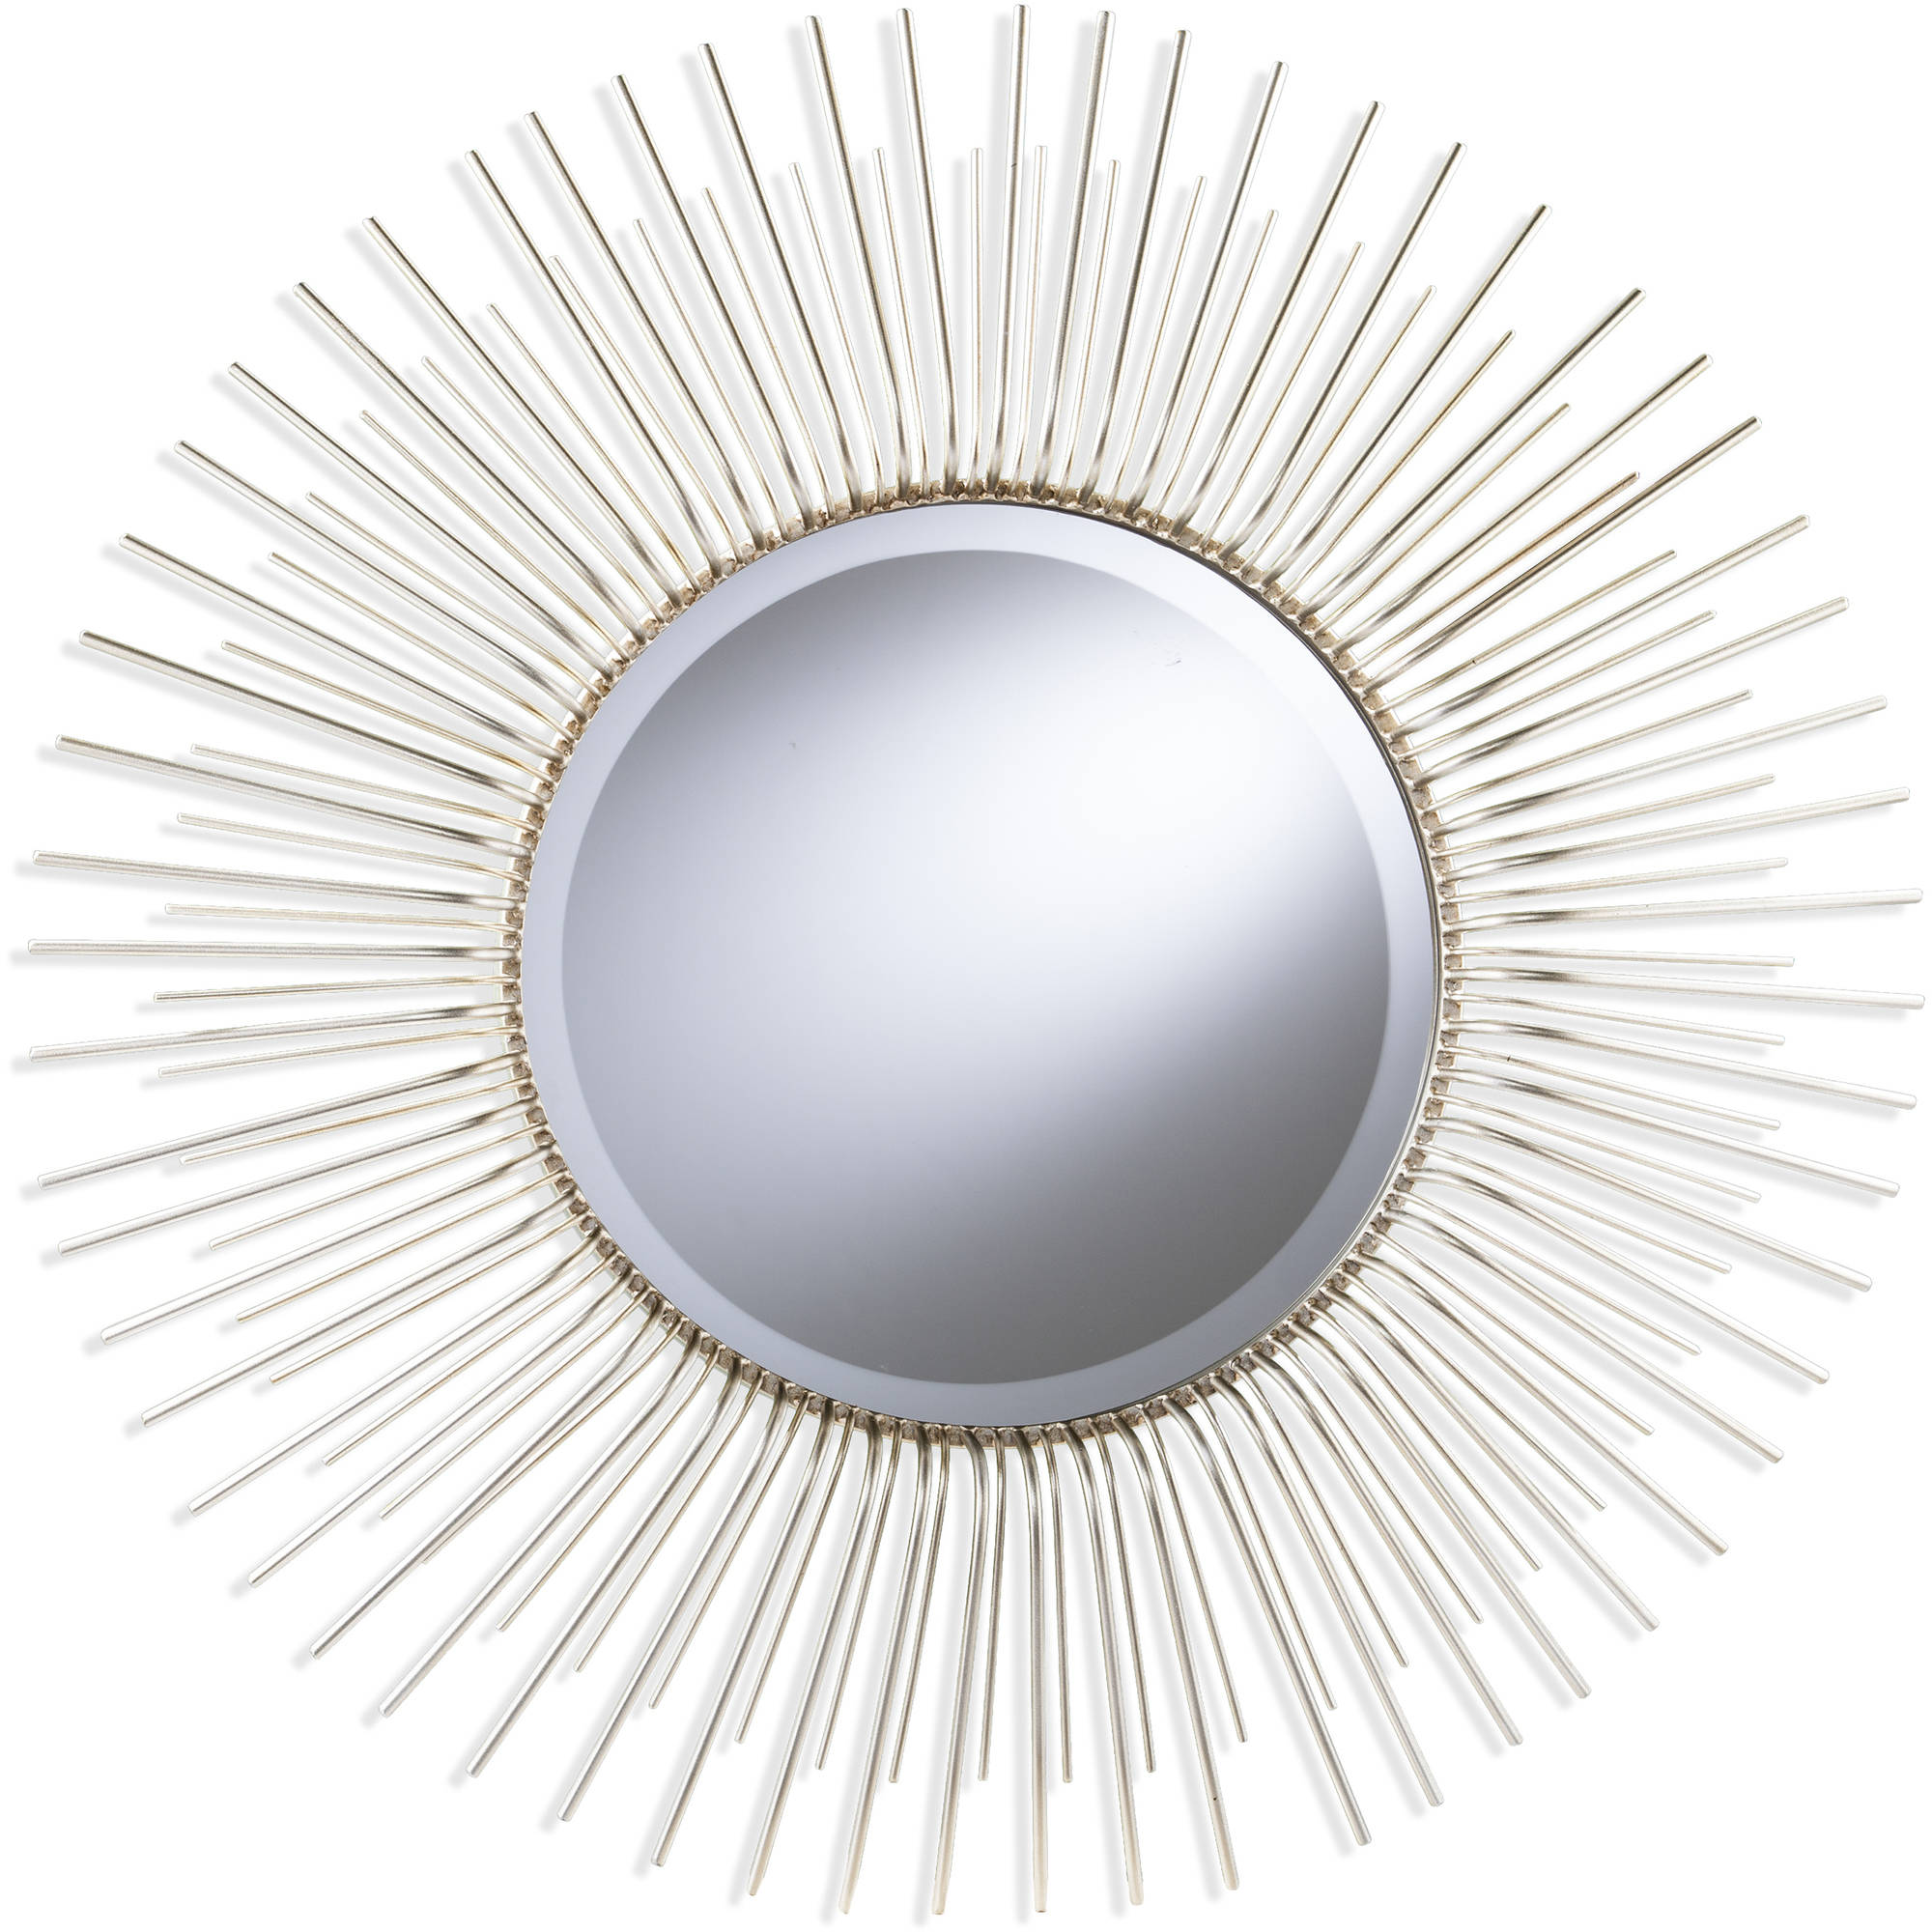 Southern Enterprises Toussai Round Oversized Sunburst Wall Mirror, Champagne Gold - image 5 of 6